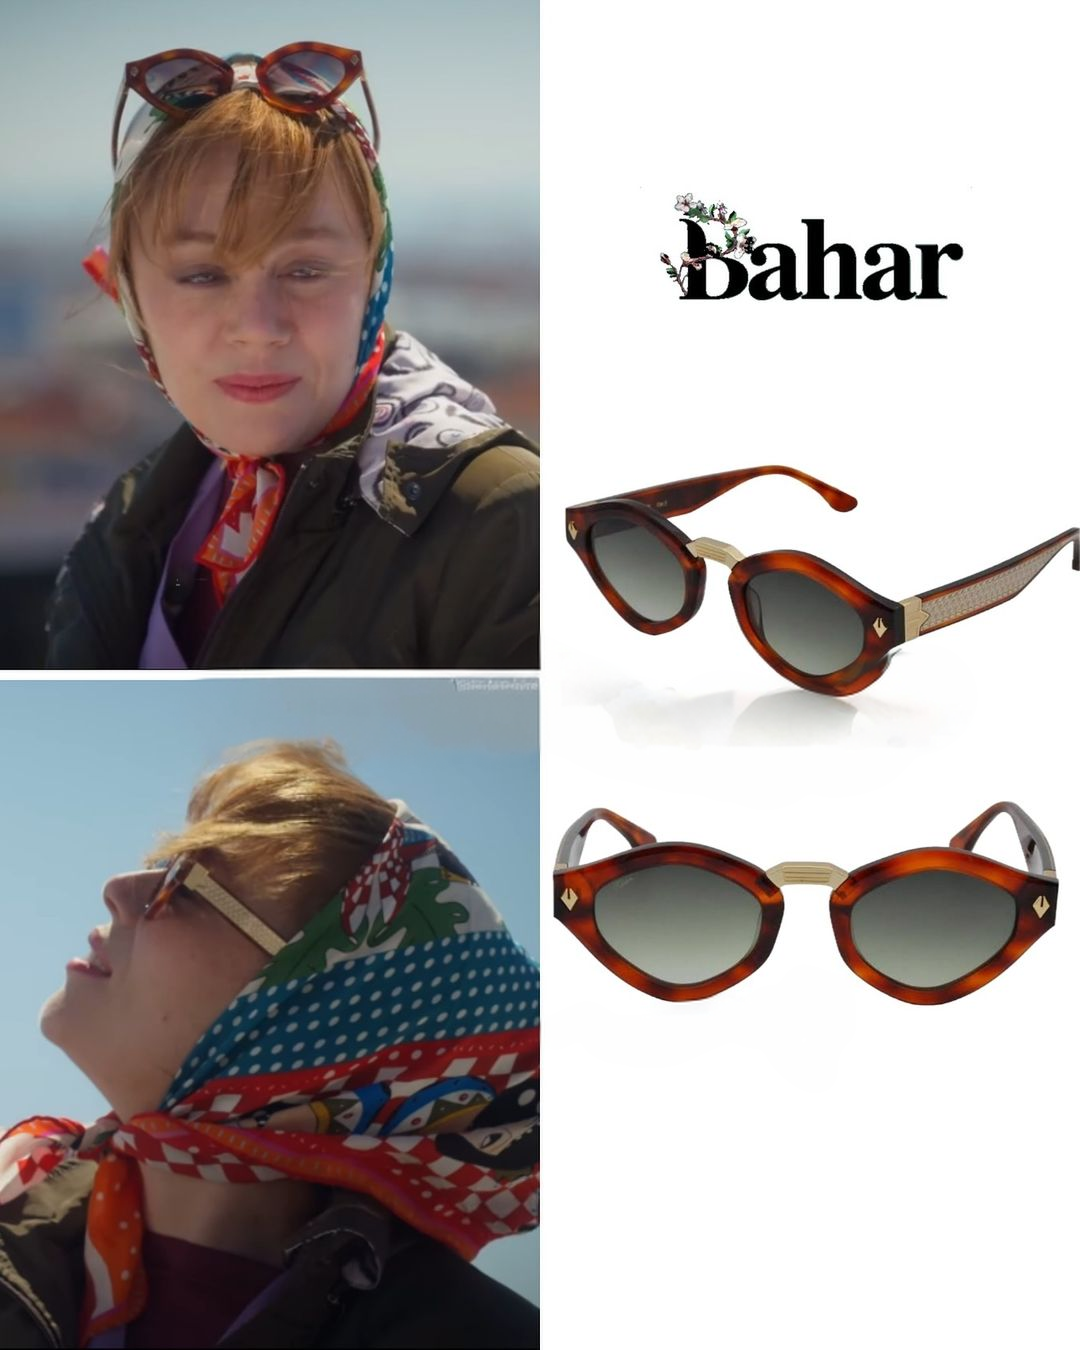 Demet Evgar's sunglasses